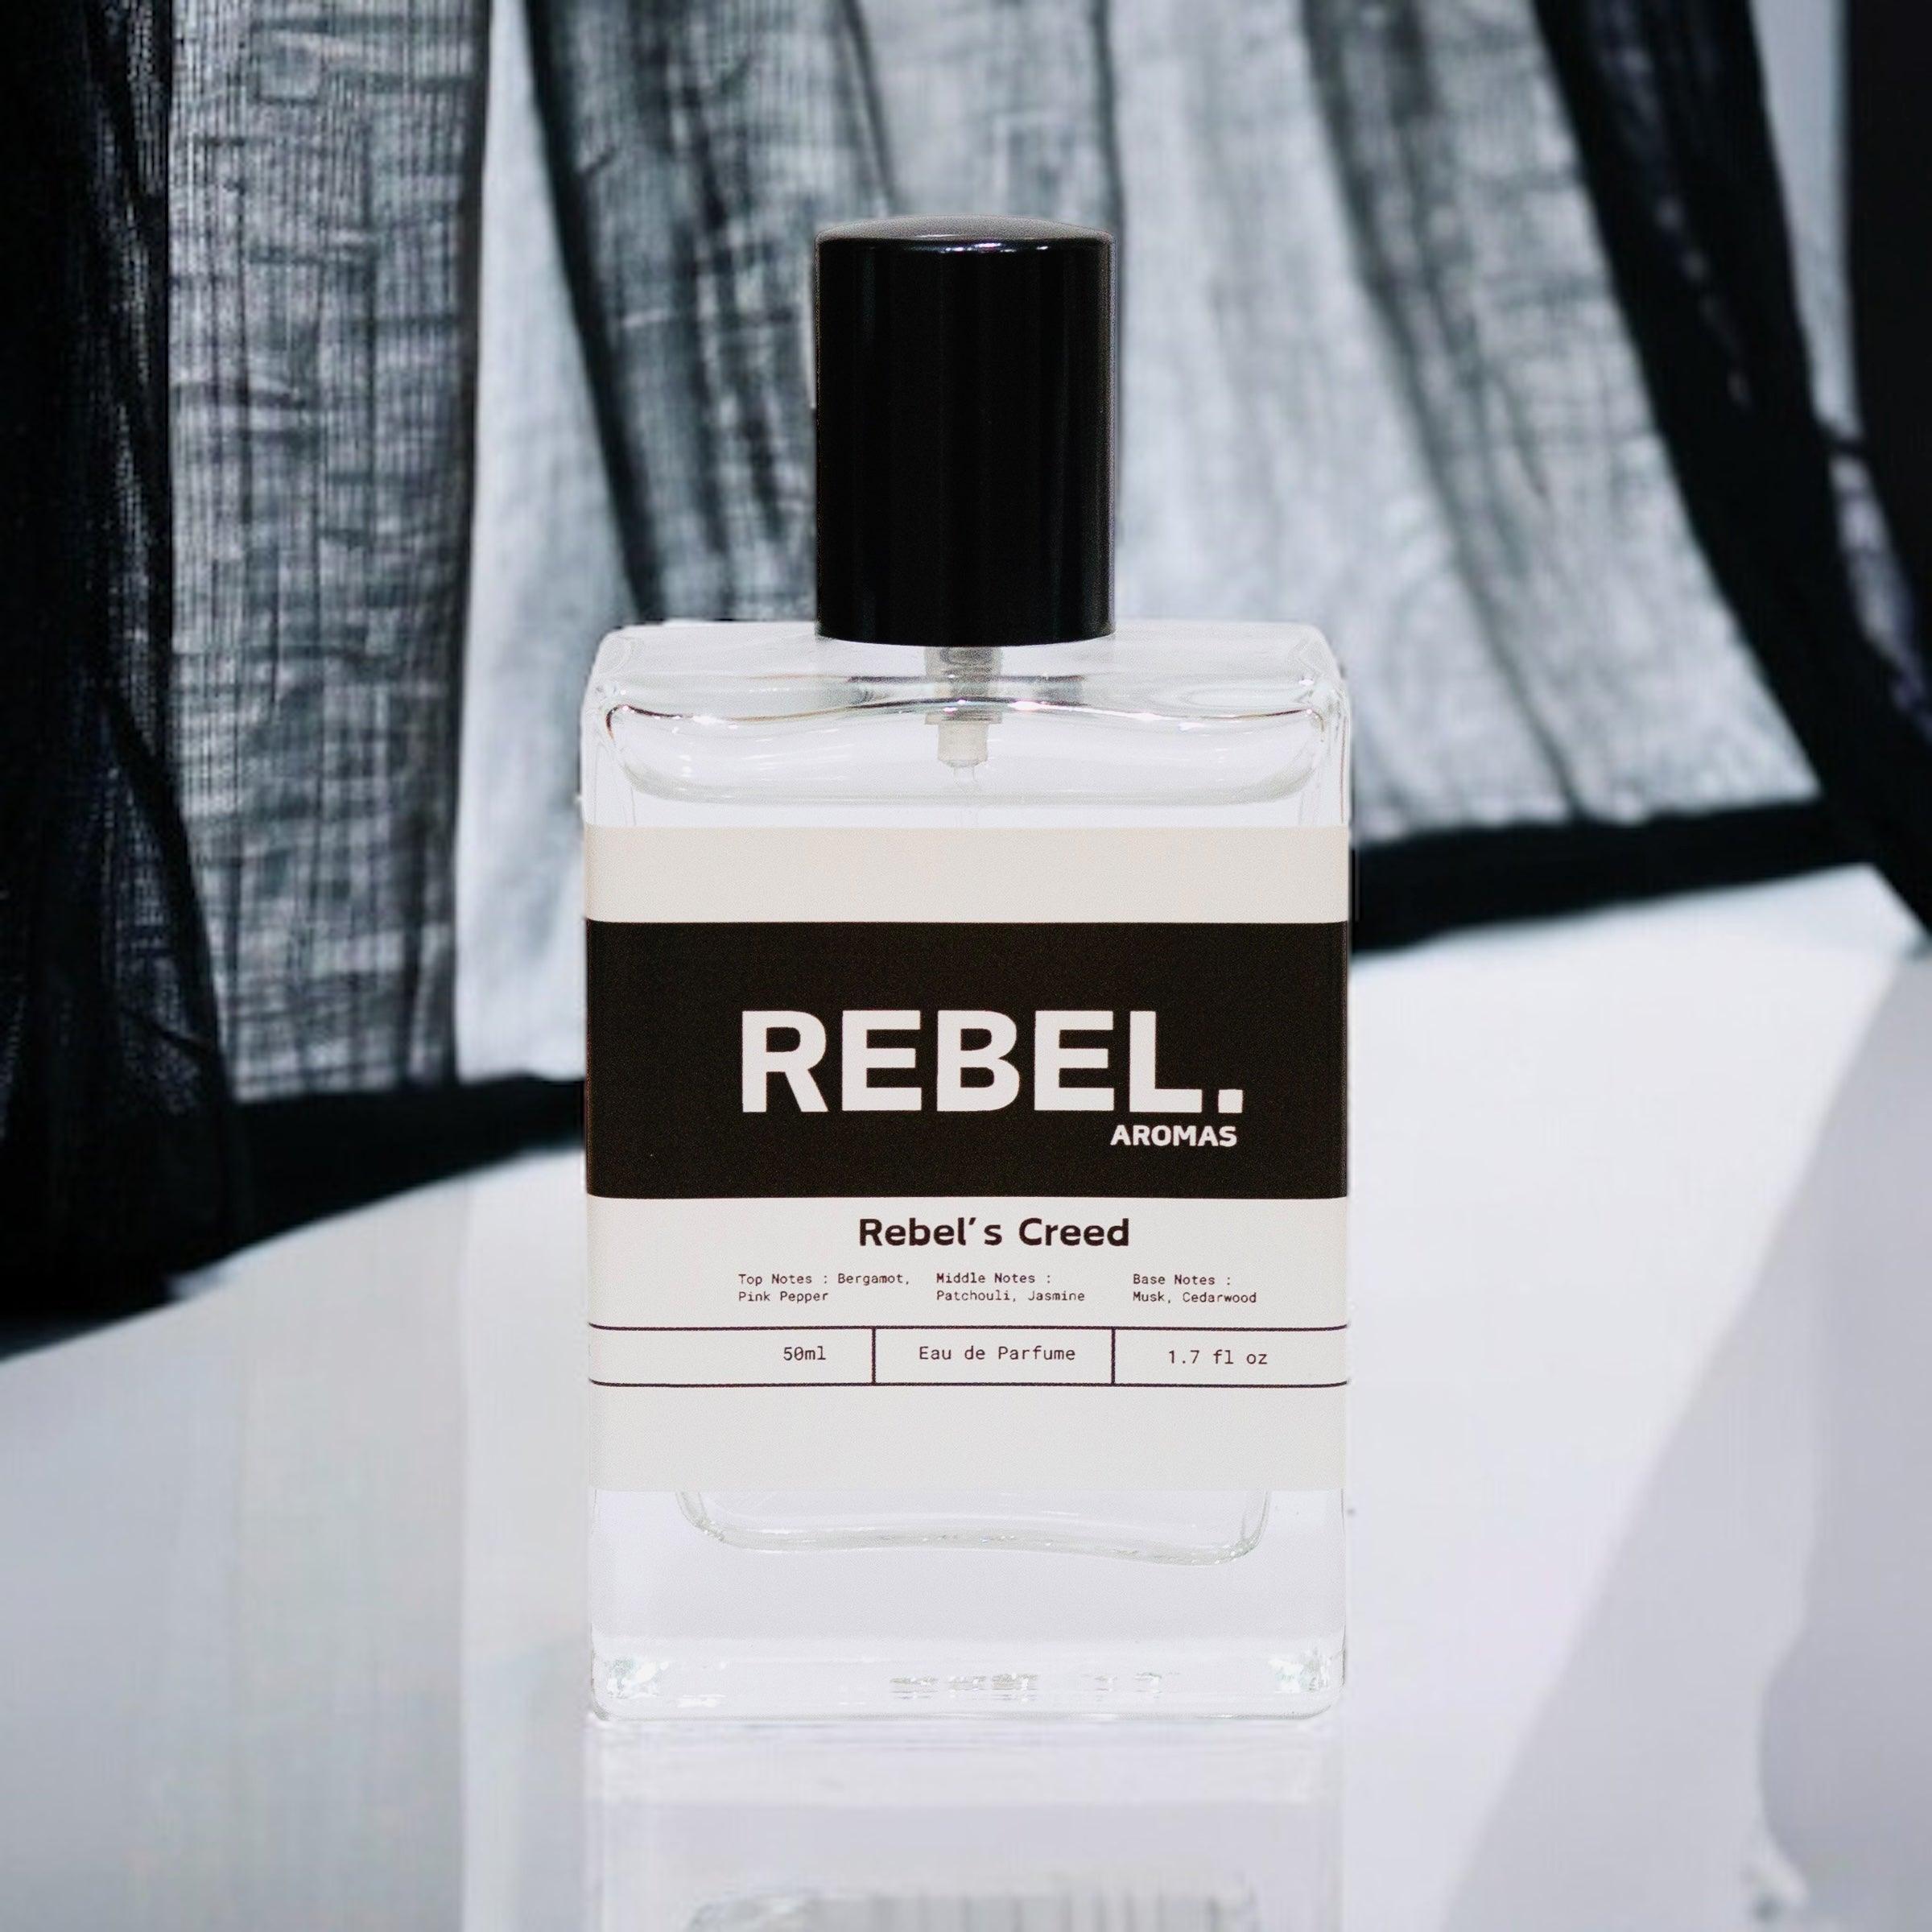 Rebels Creed - Rebel Aromas